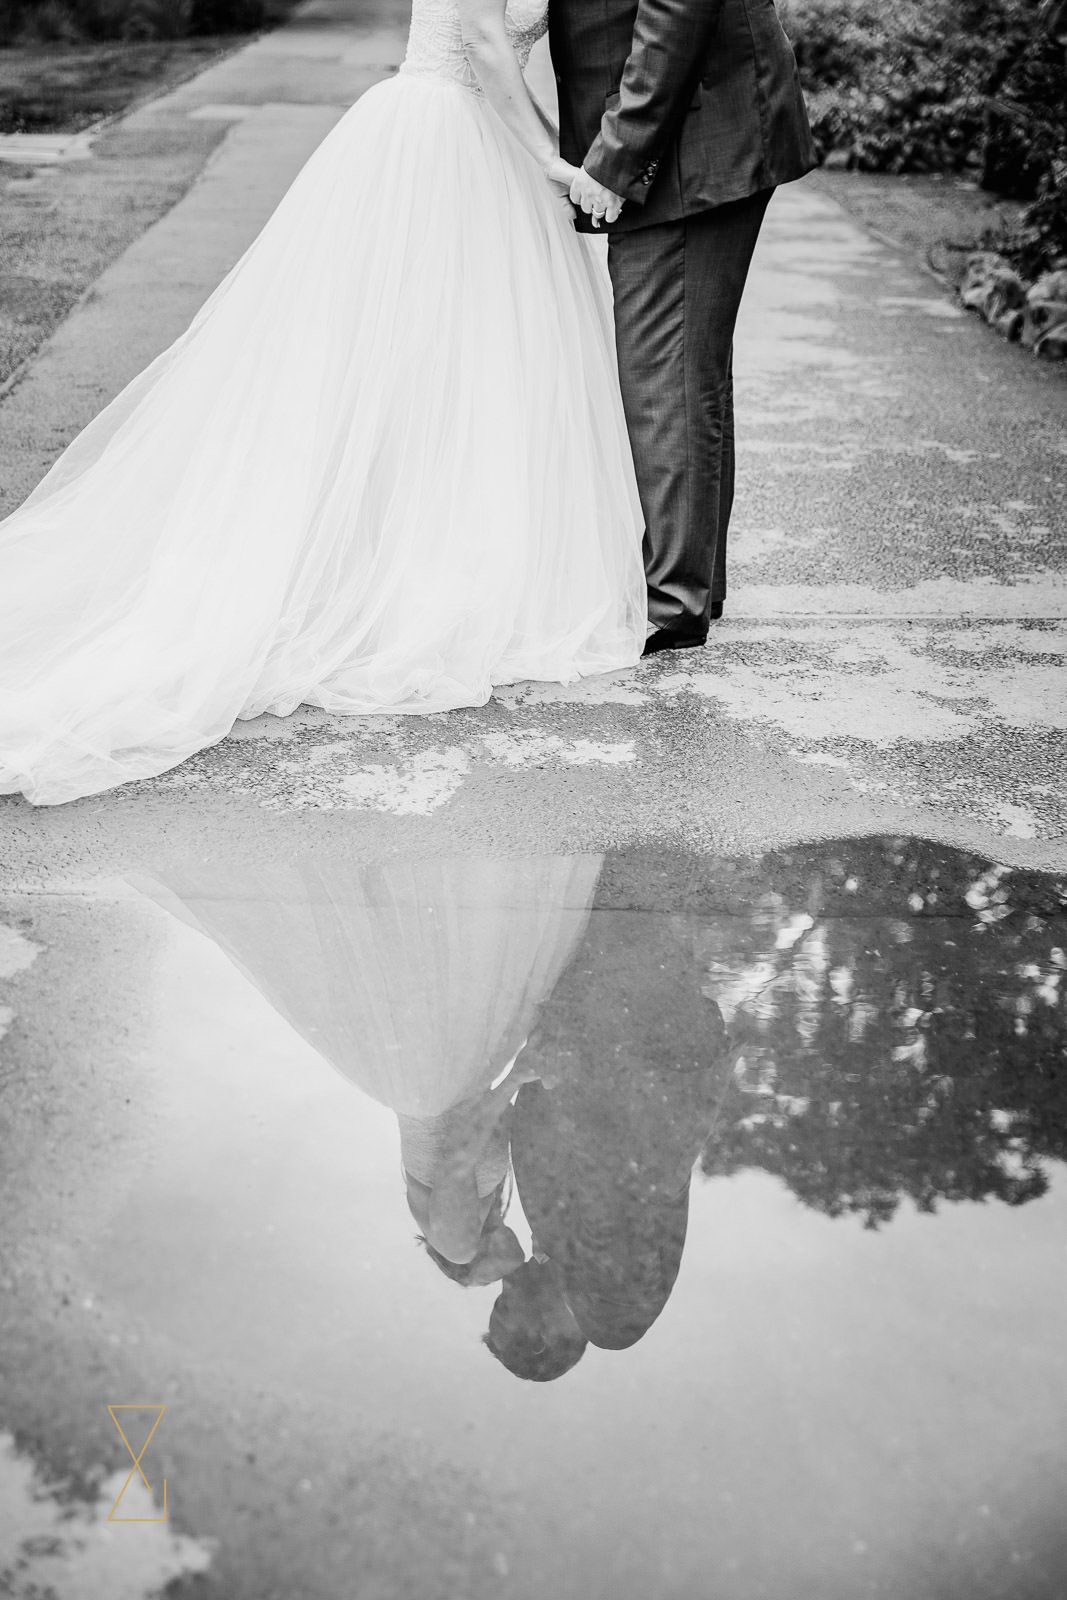 Rain-on-wedding-day-tips-70.jpg